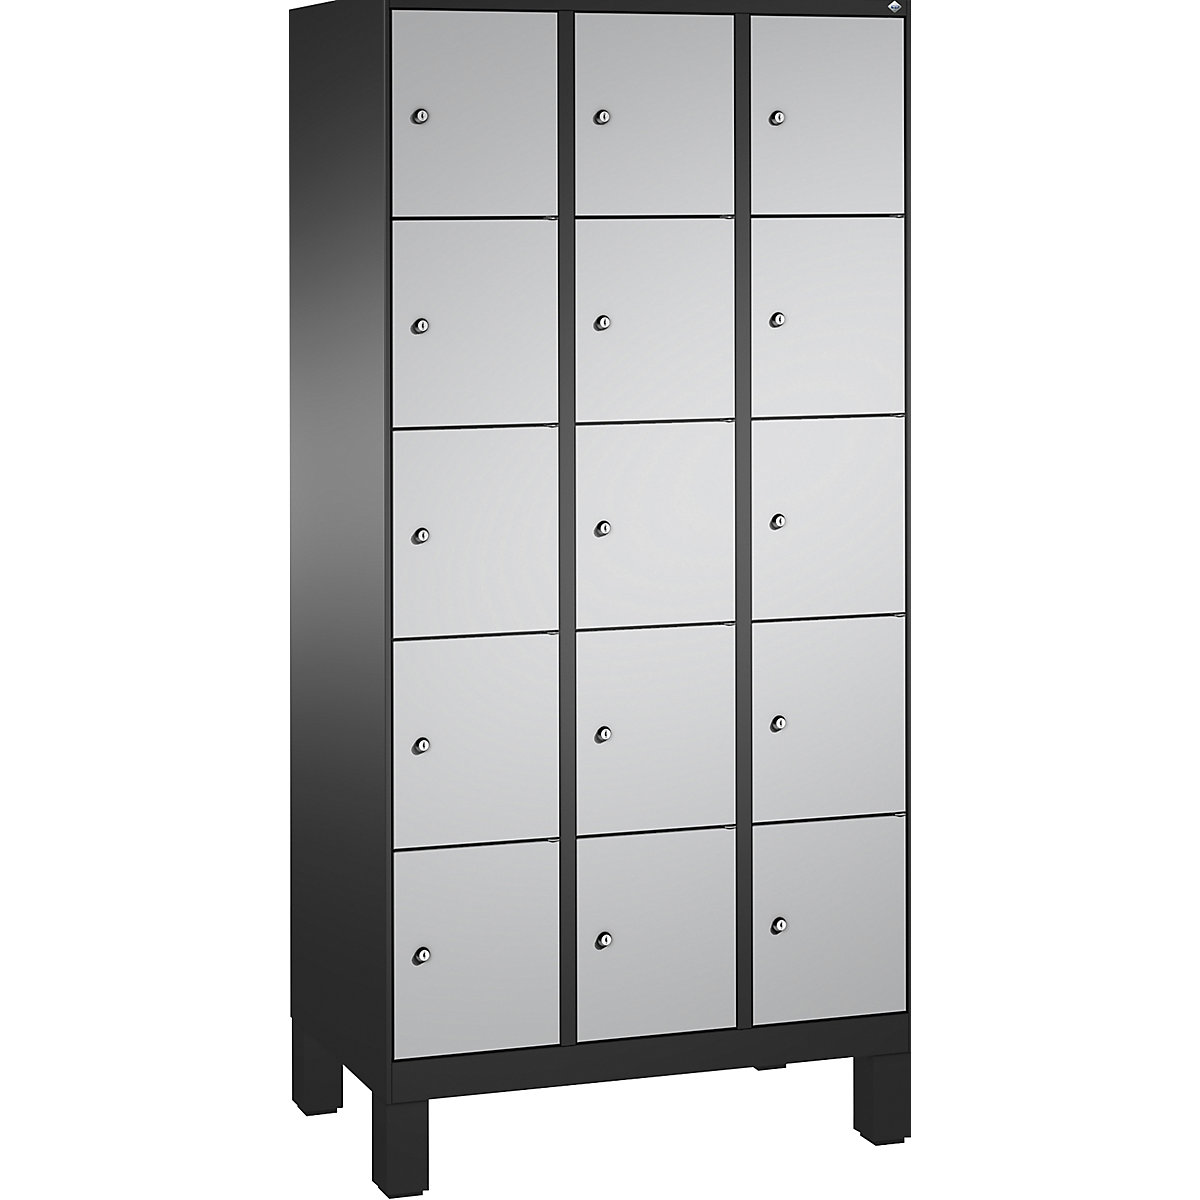 EVOLO locker unit, with feet – C+P, 3 compartments, 5 shelf compartments each, compartment width 300 mm, black grey / white aluminium-12